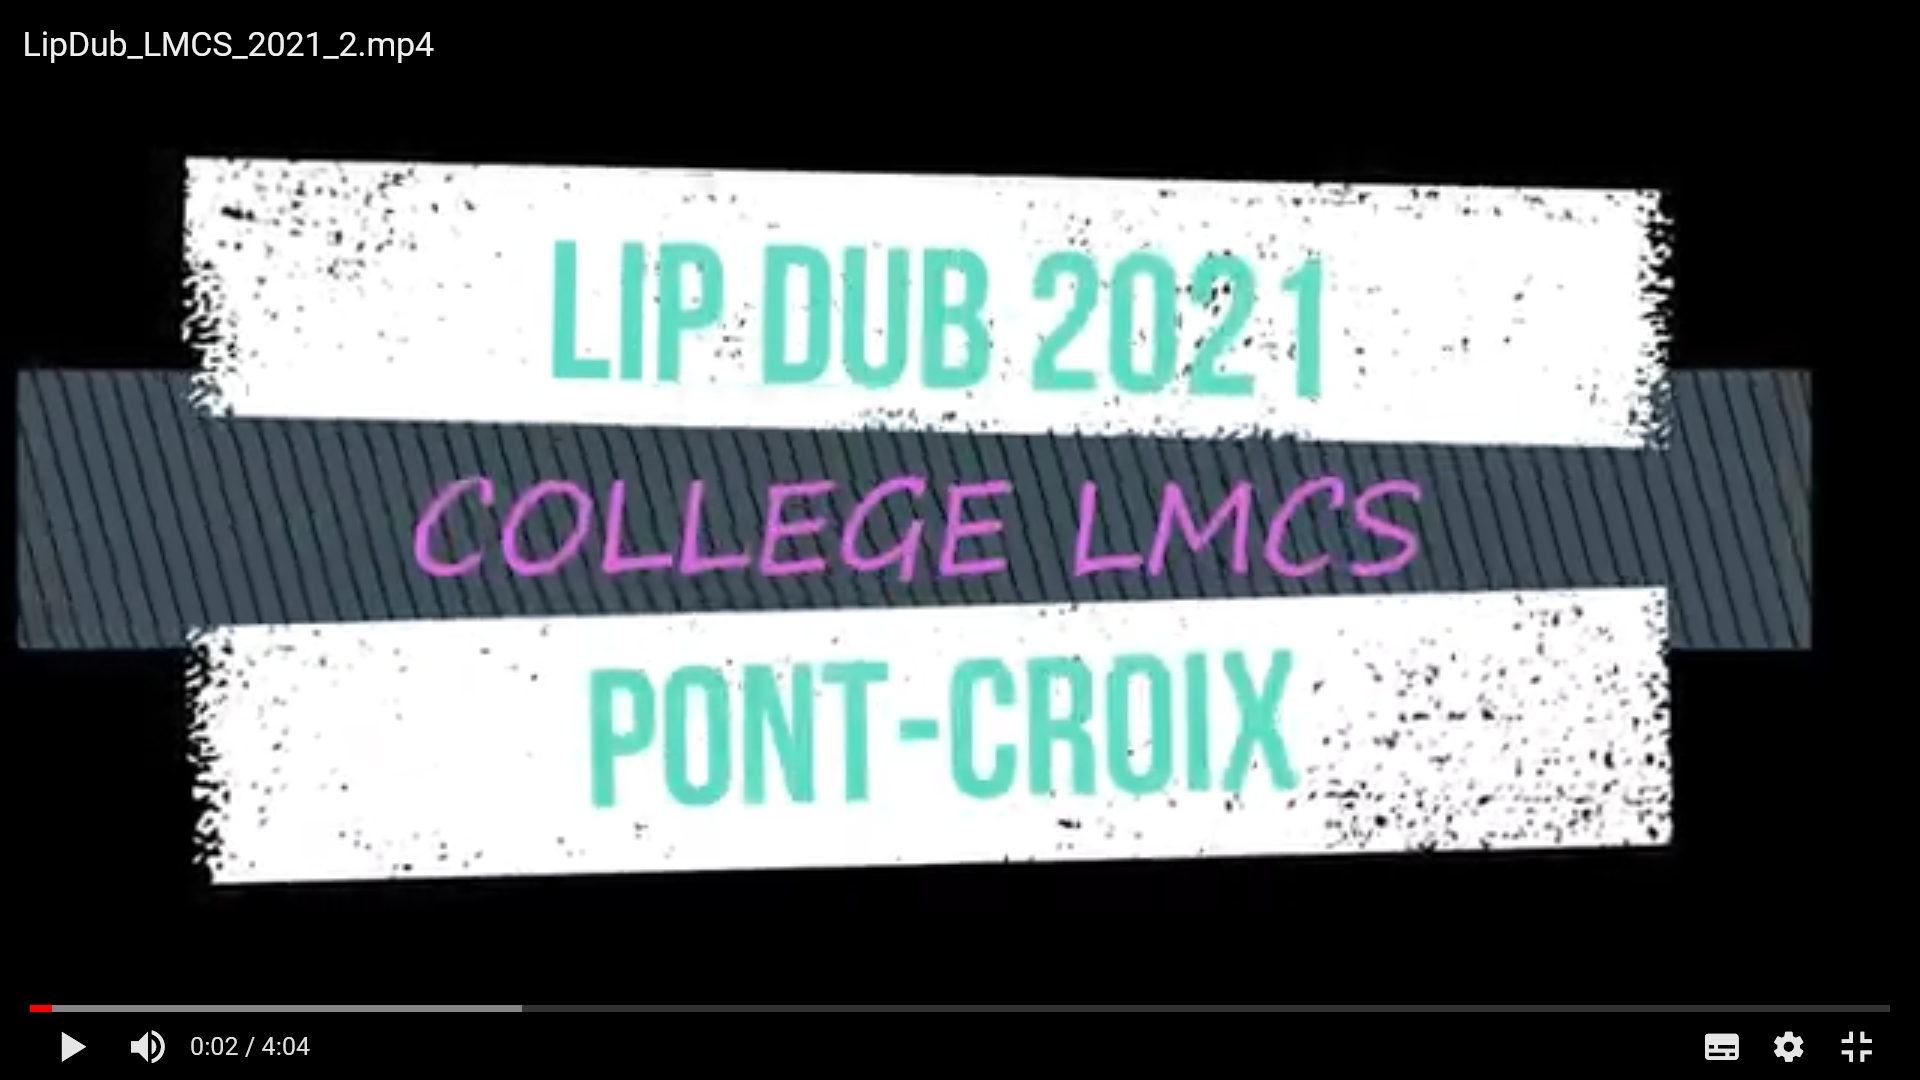 LipDup LMCS 2021